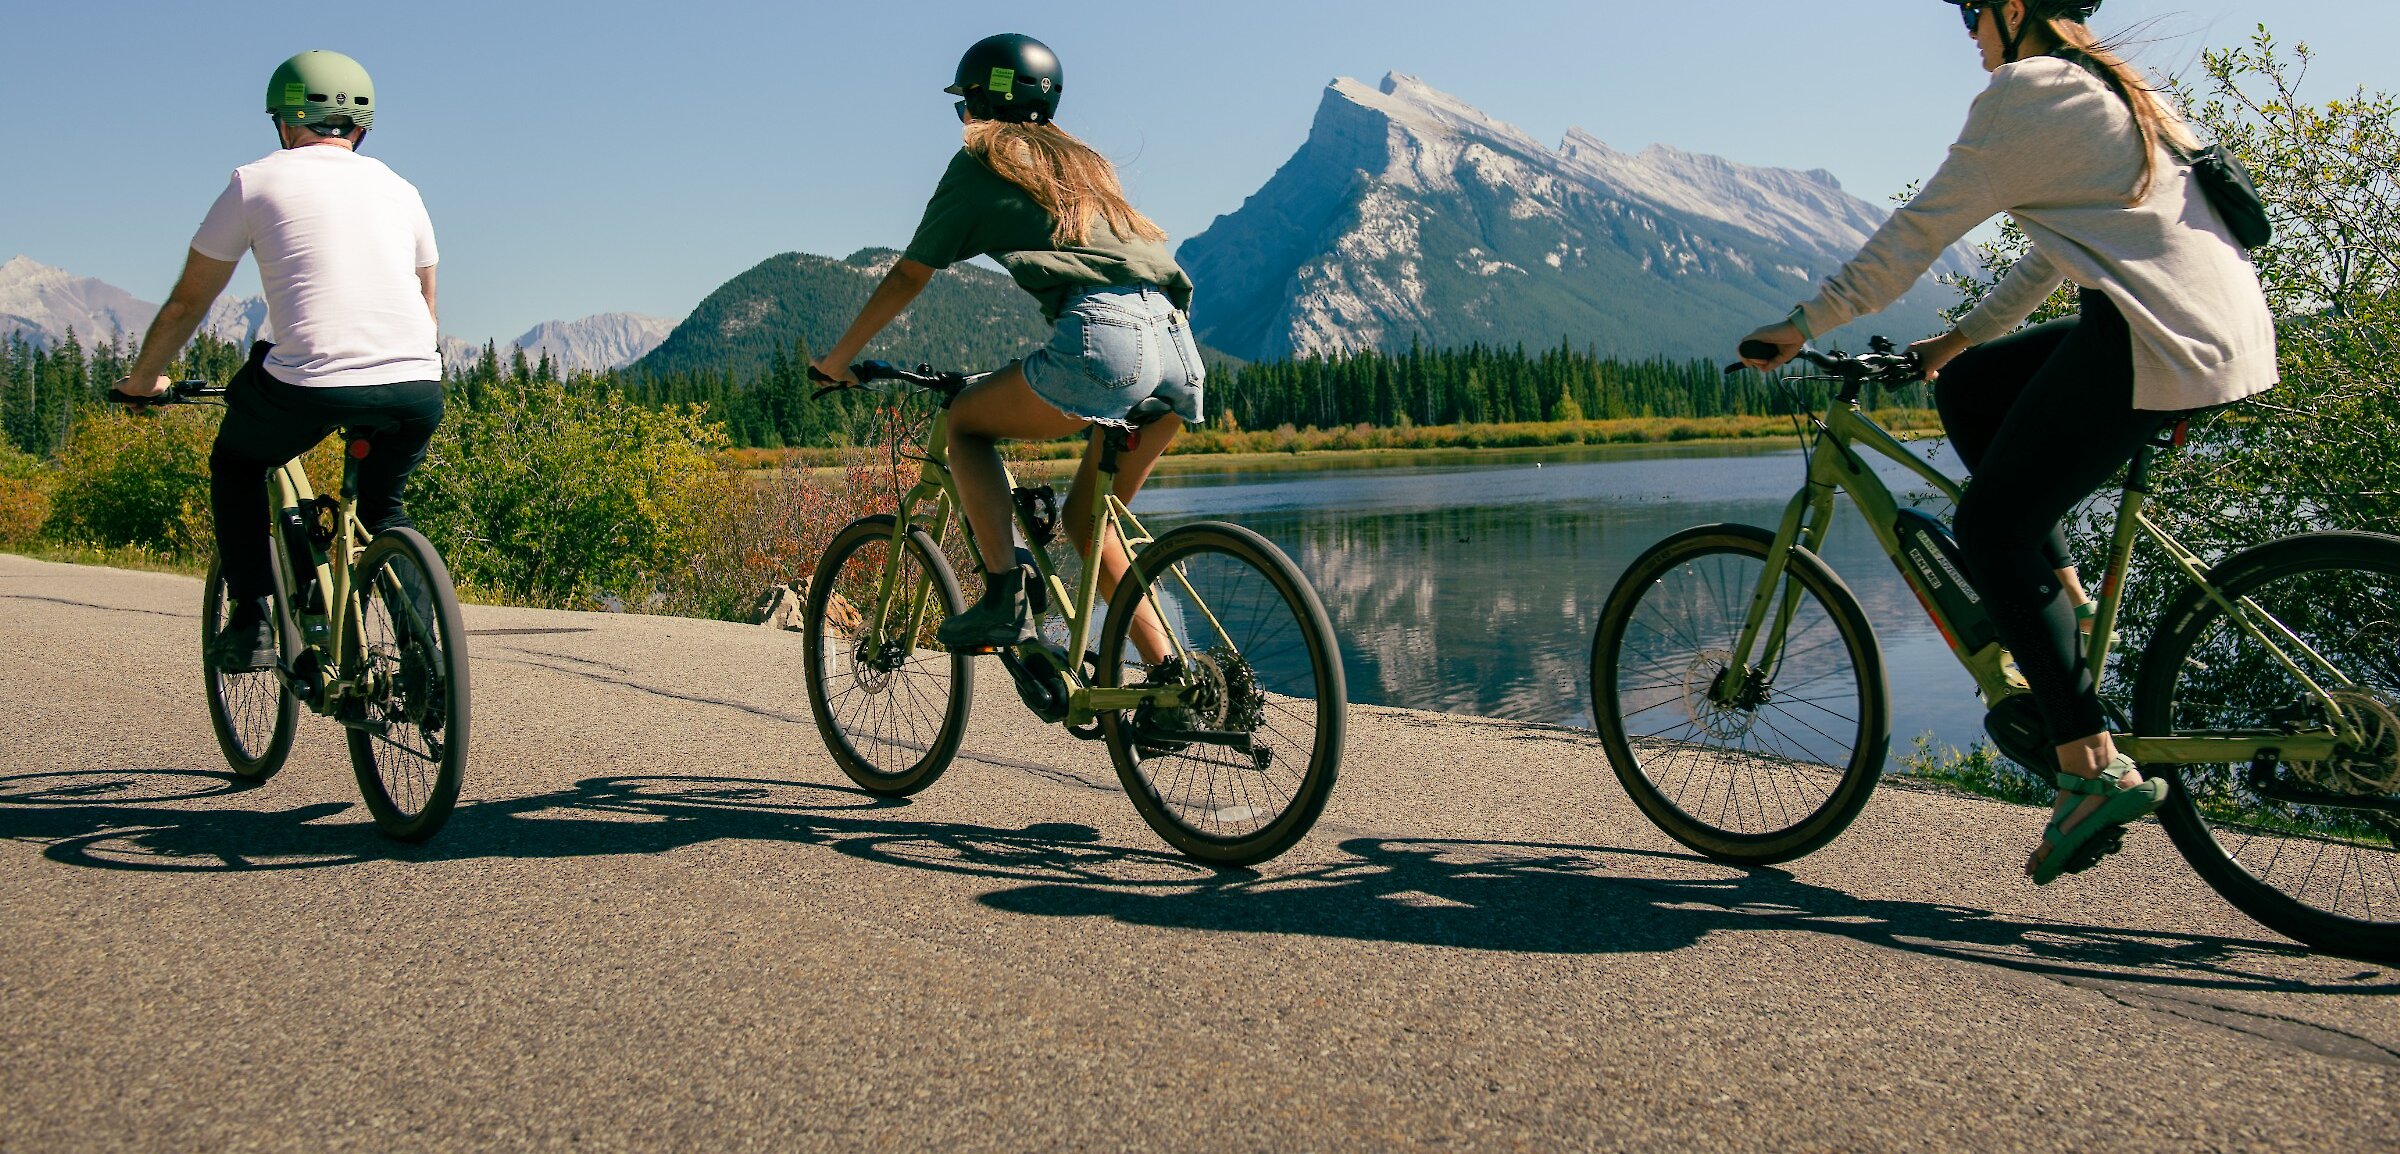 Bike Riding in Banff National Park